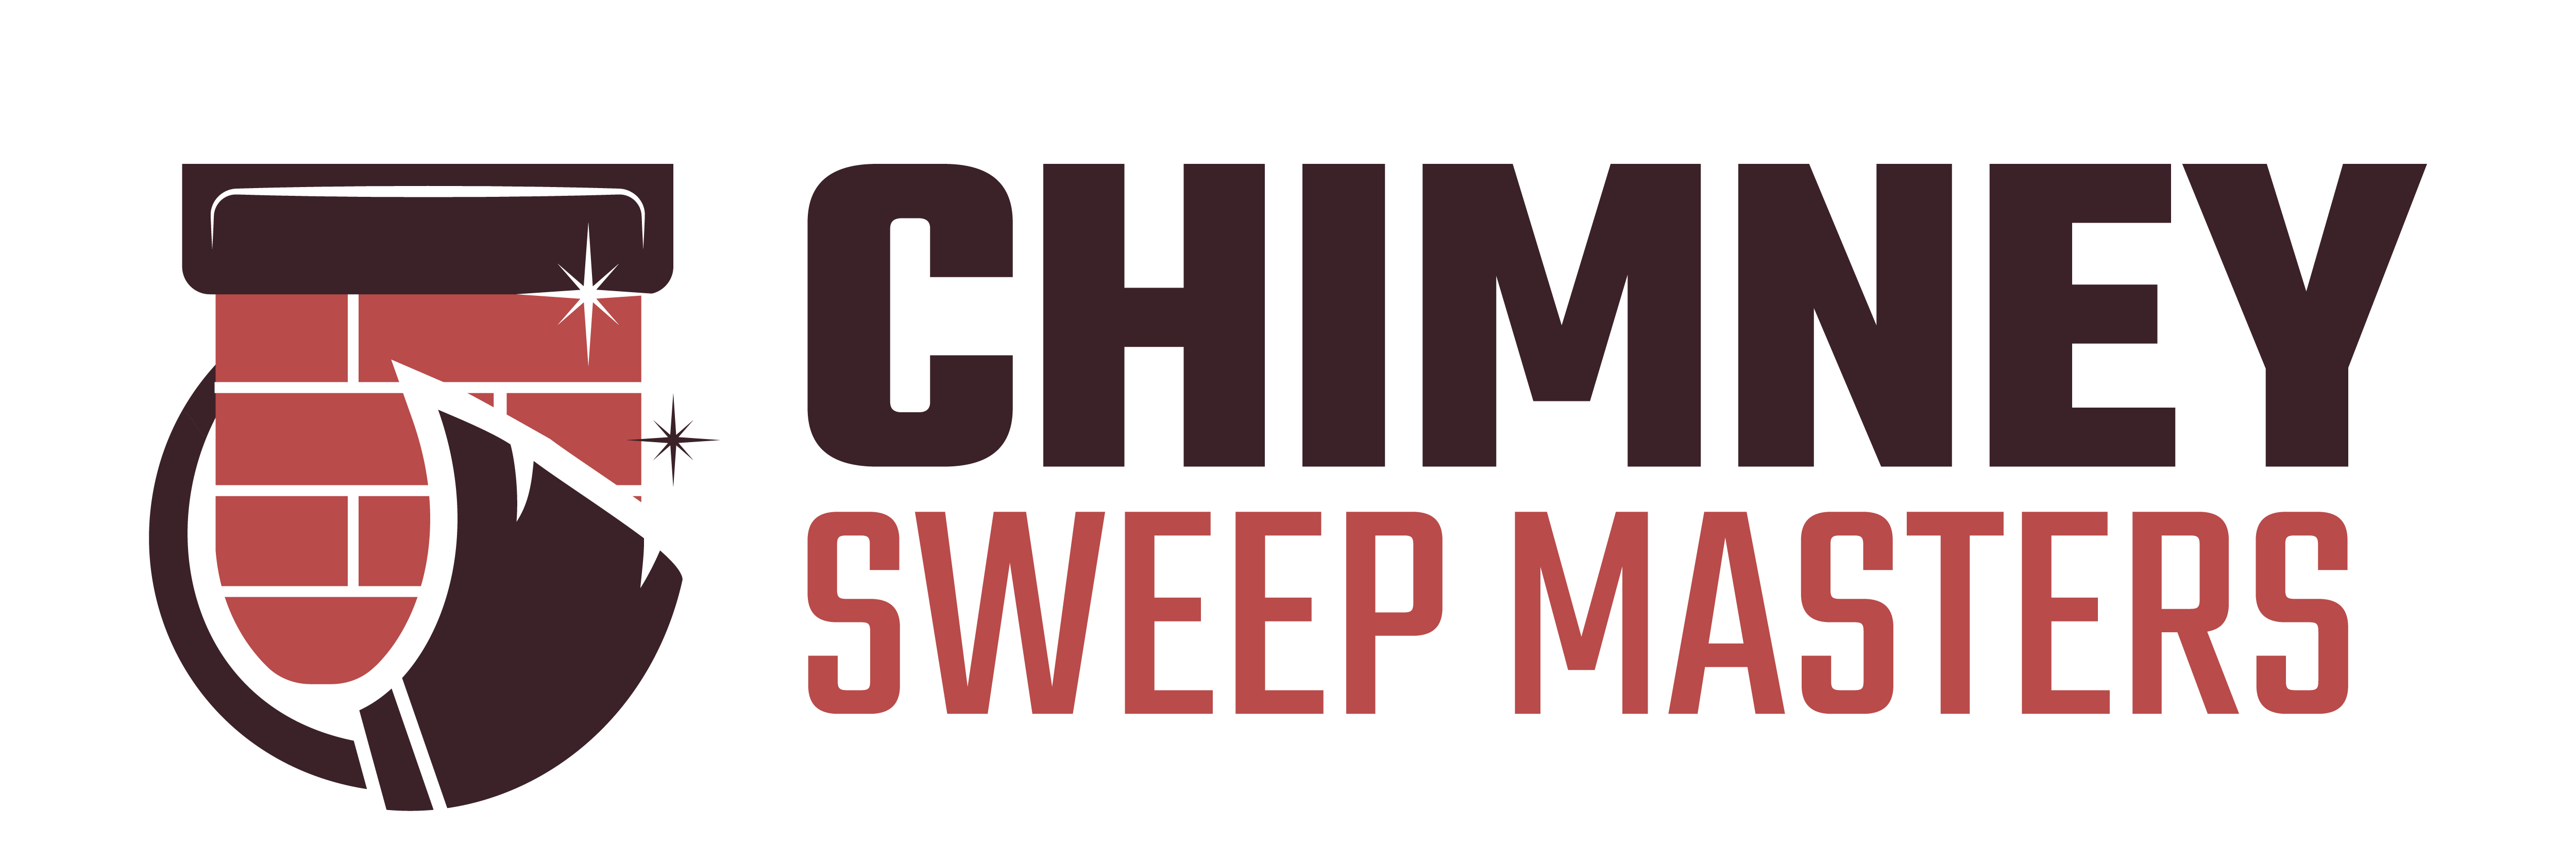 Chimney Sweep Masters Mirage Logo